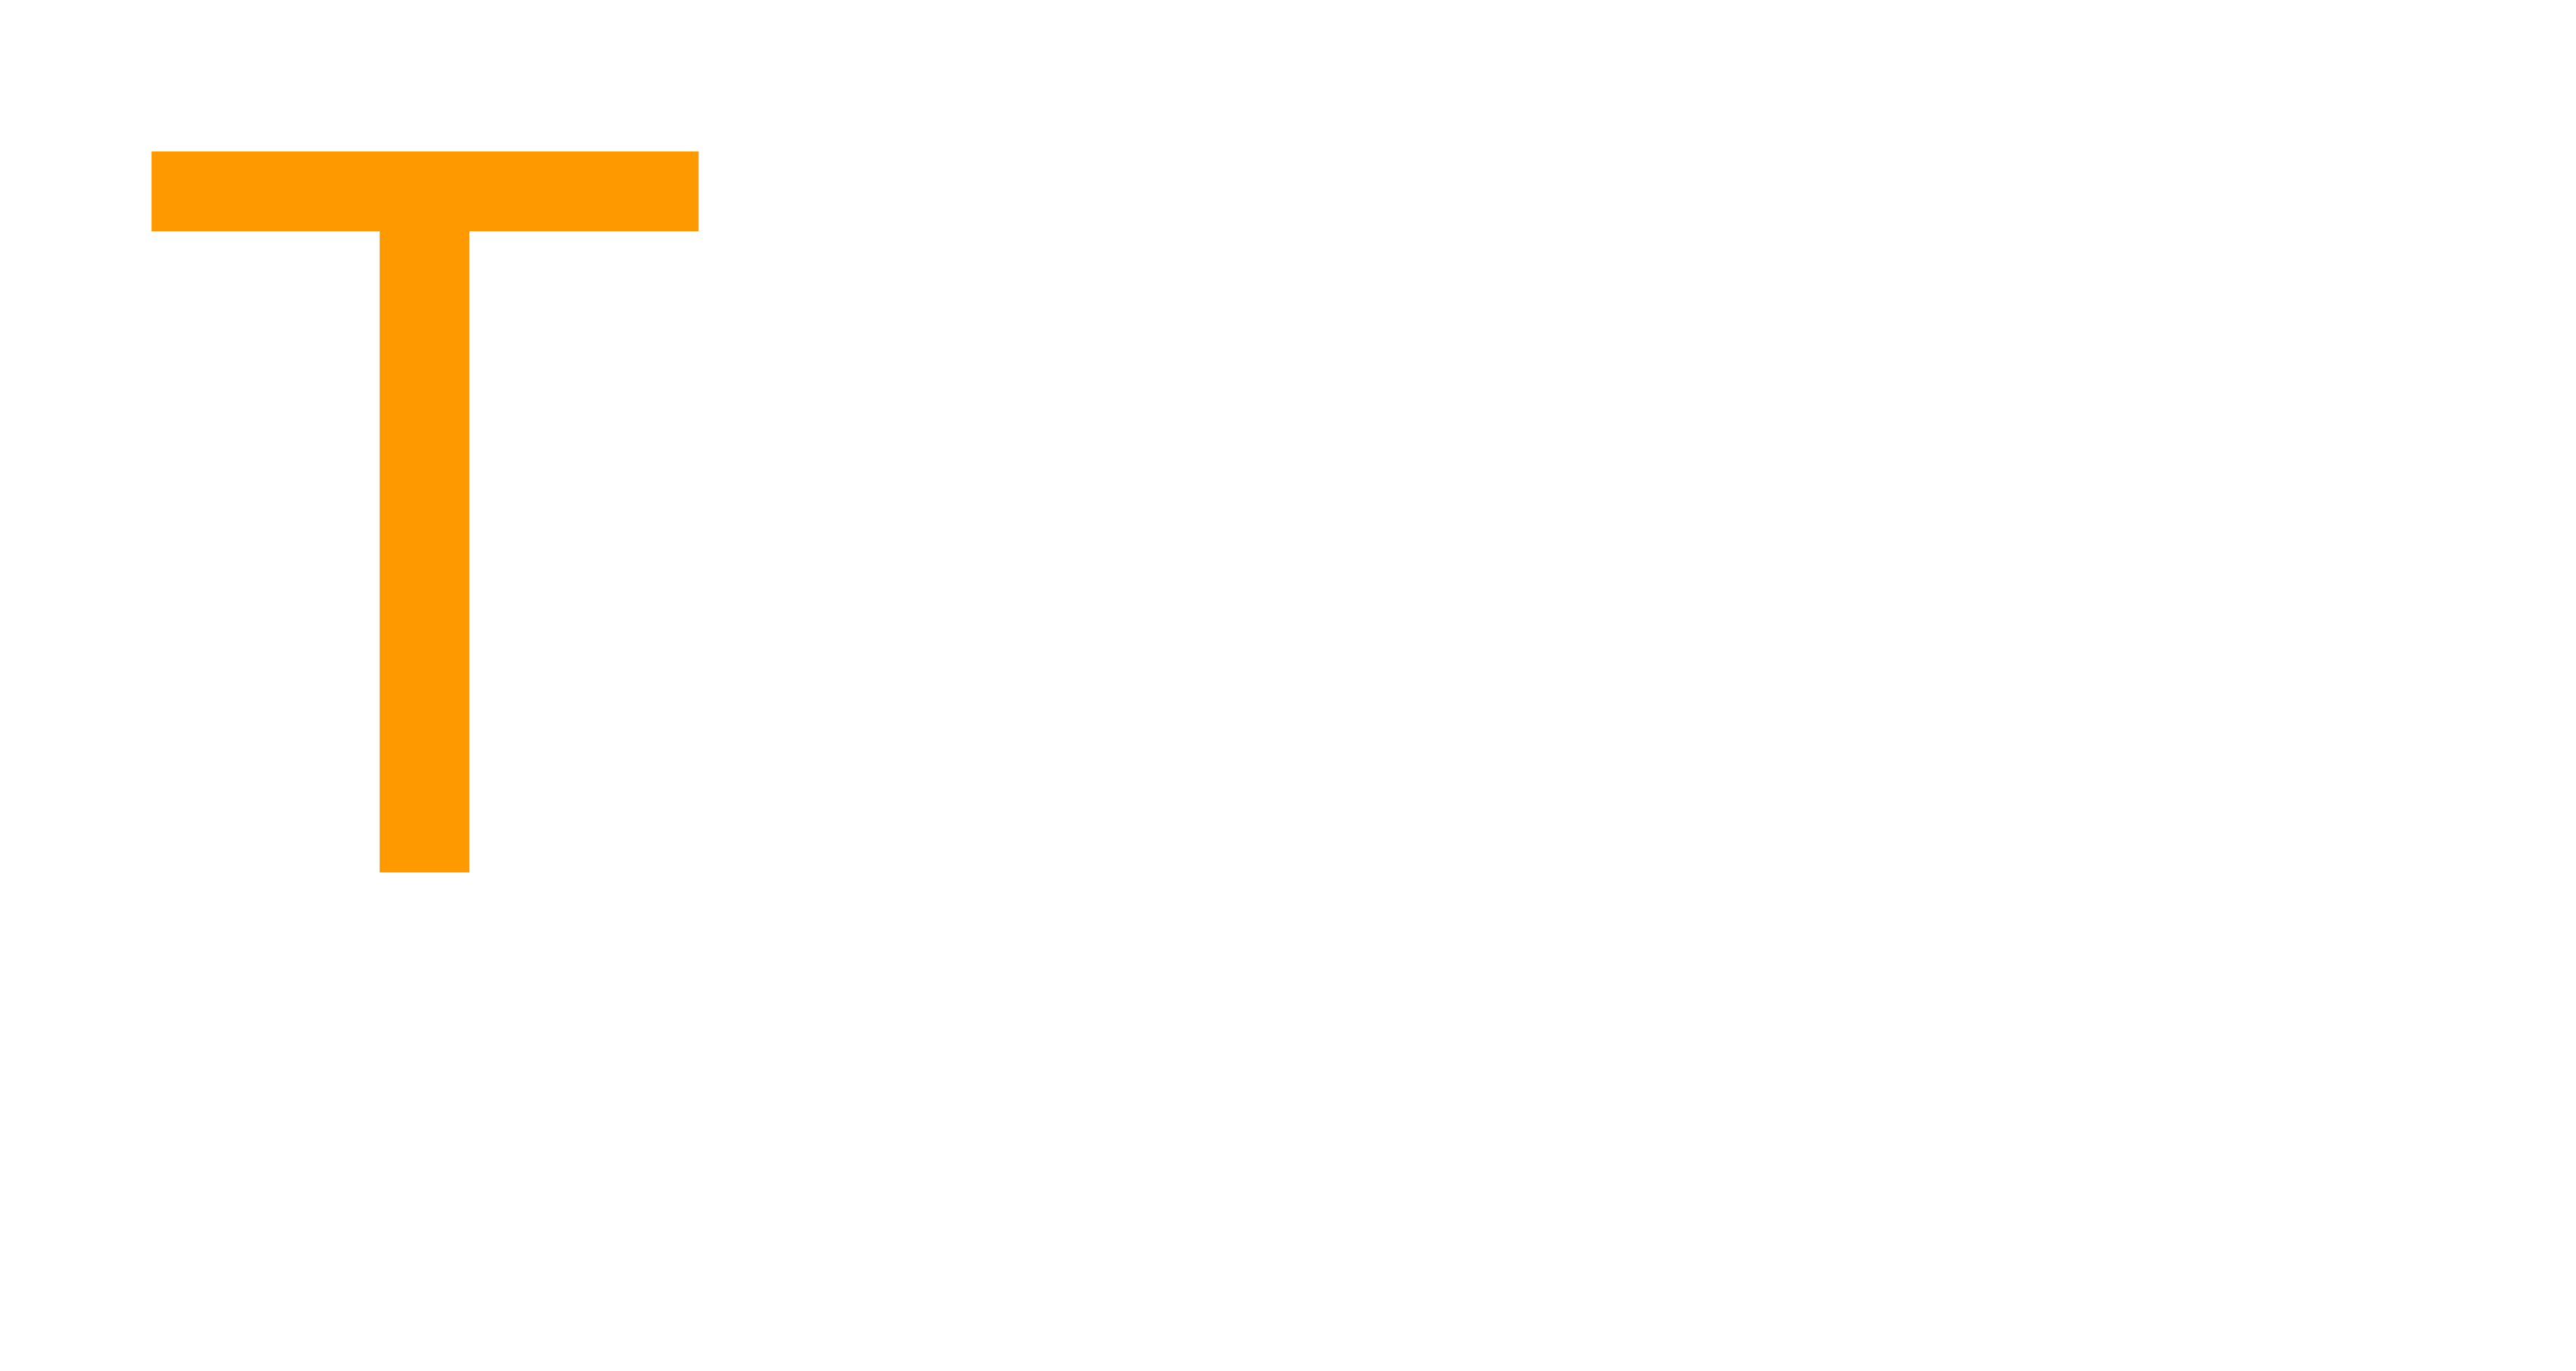 talkingBUSINESS trading & mehr